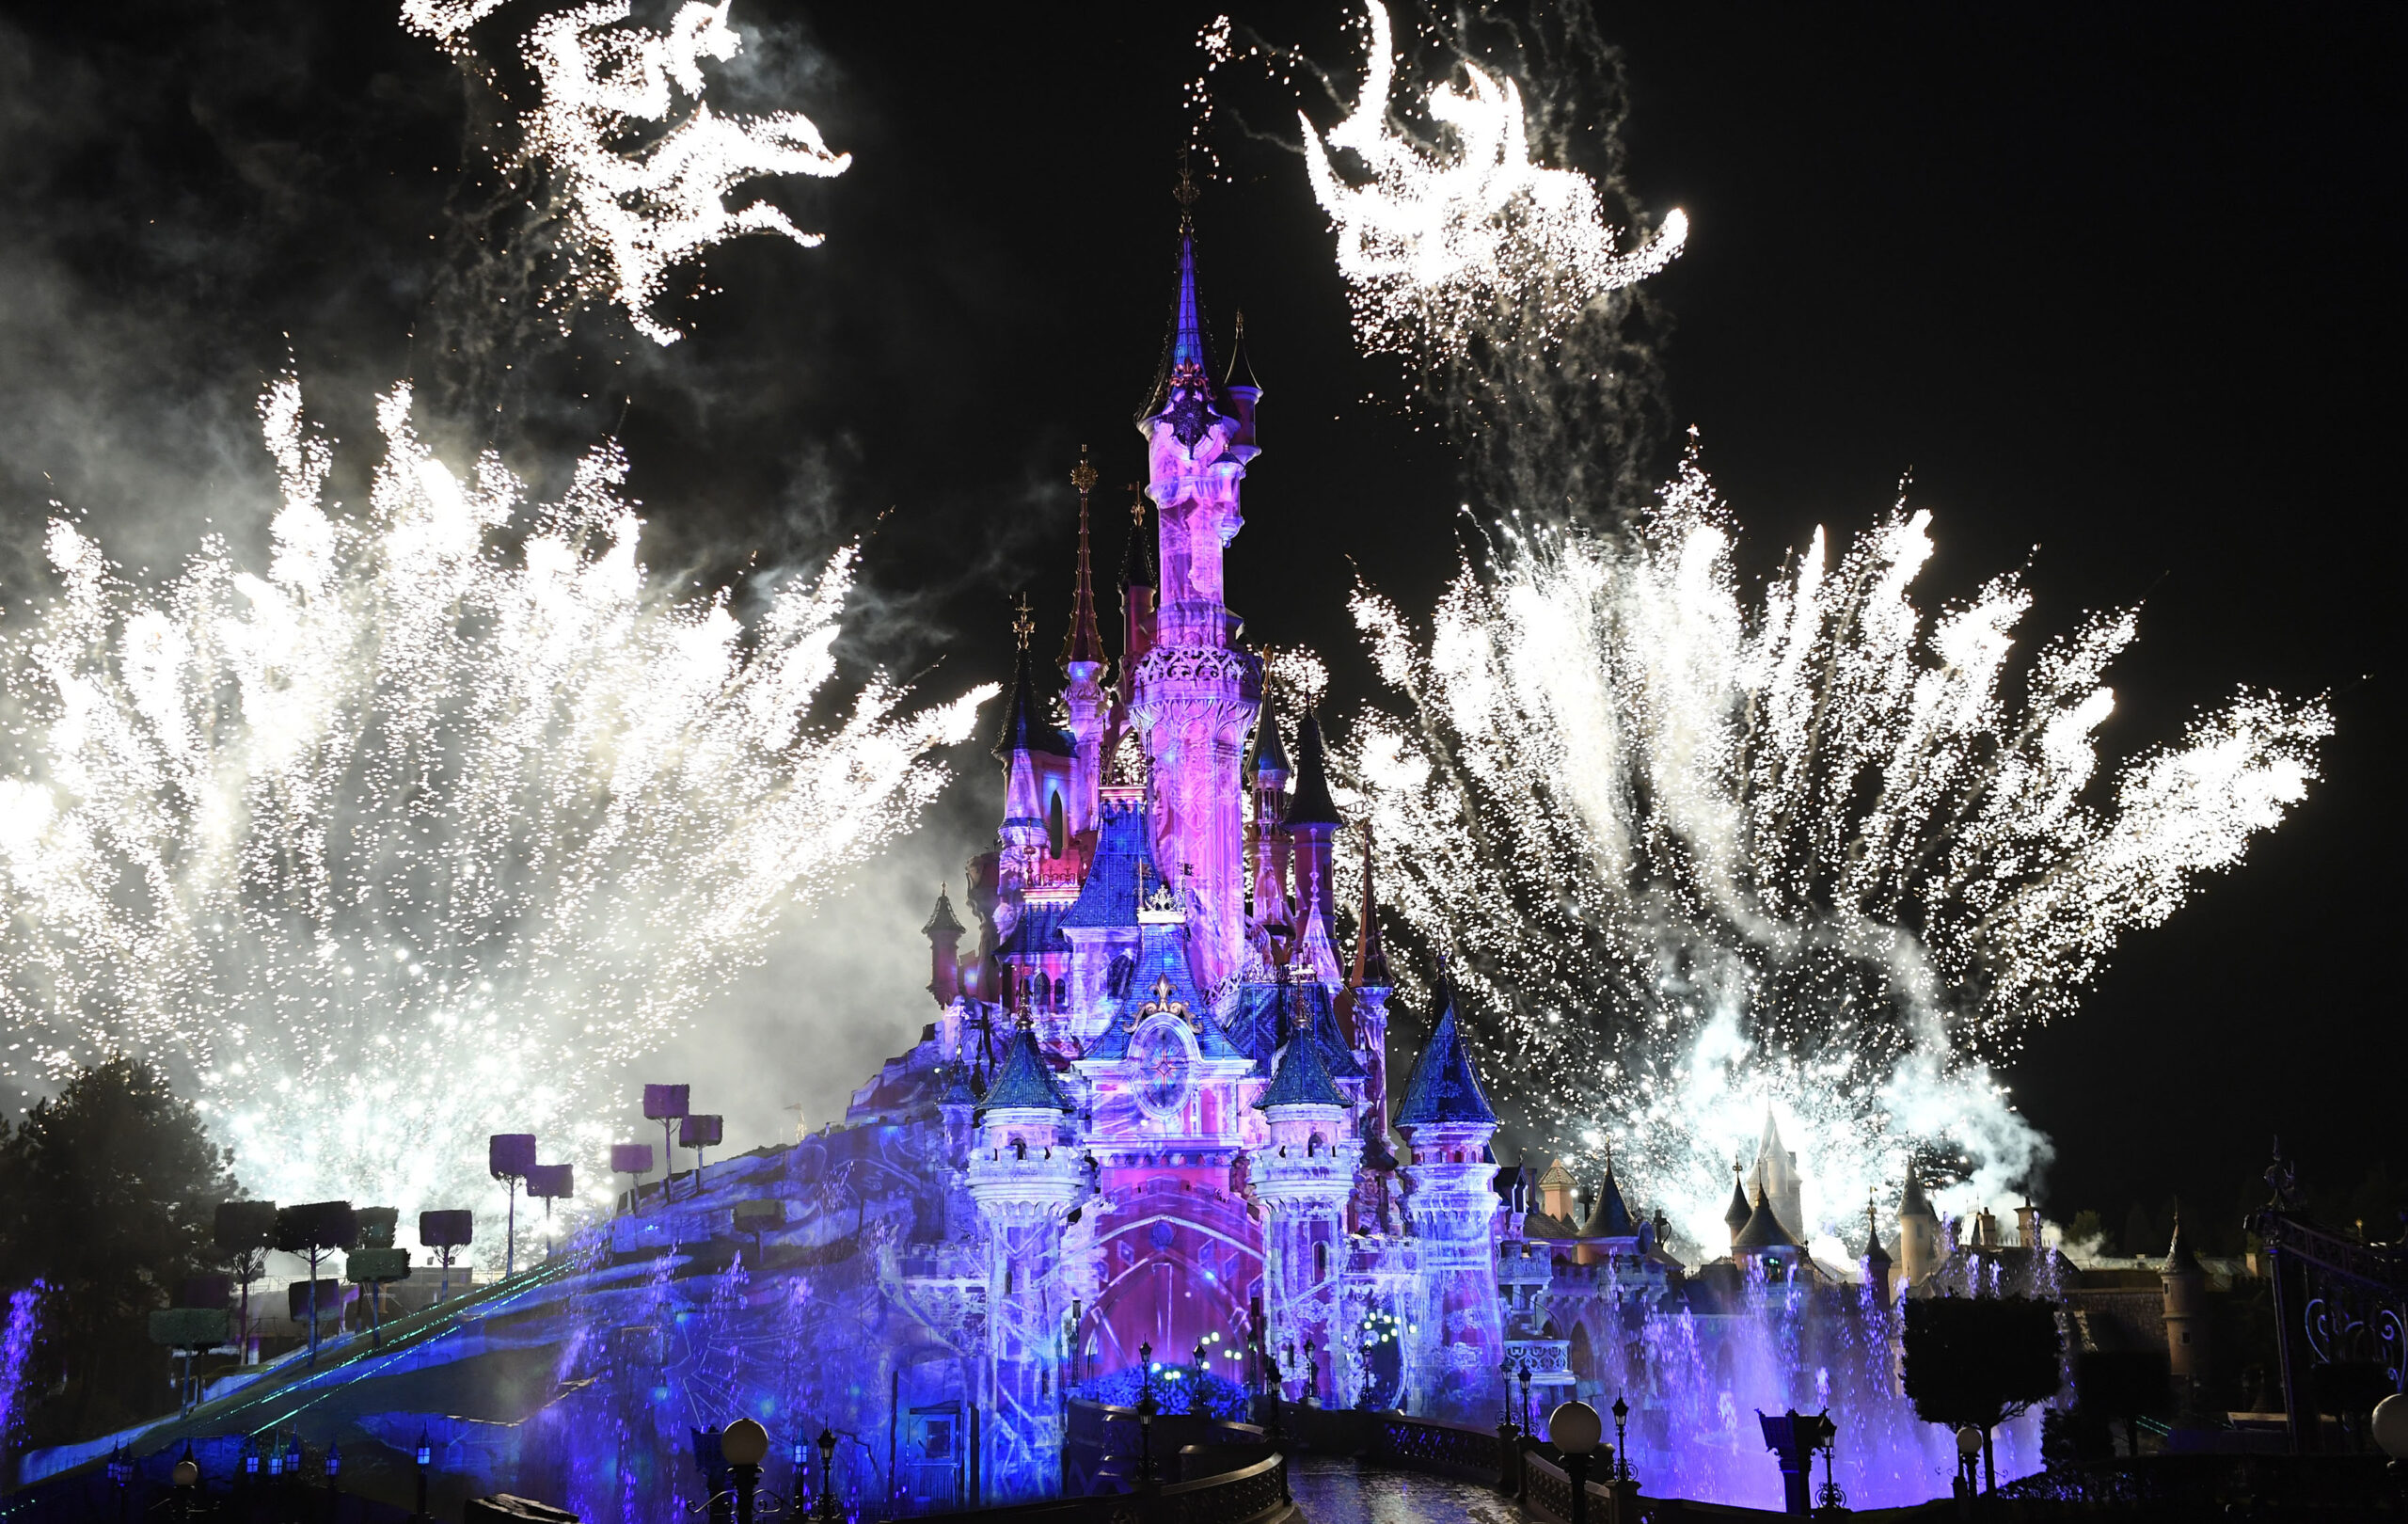 Disney Illuminations vuurwerk keert terug op 21 december 2021